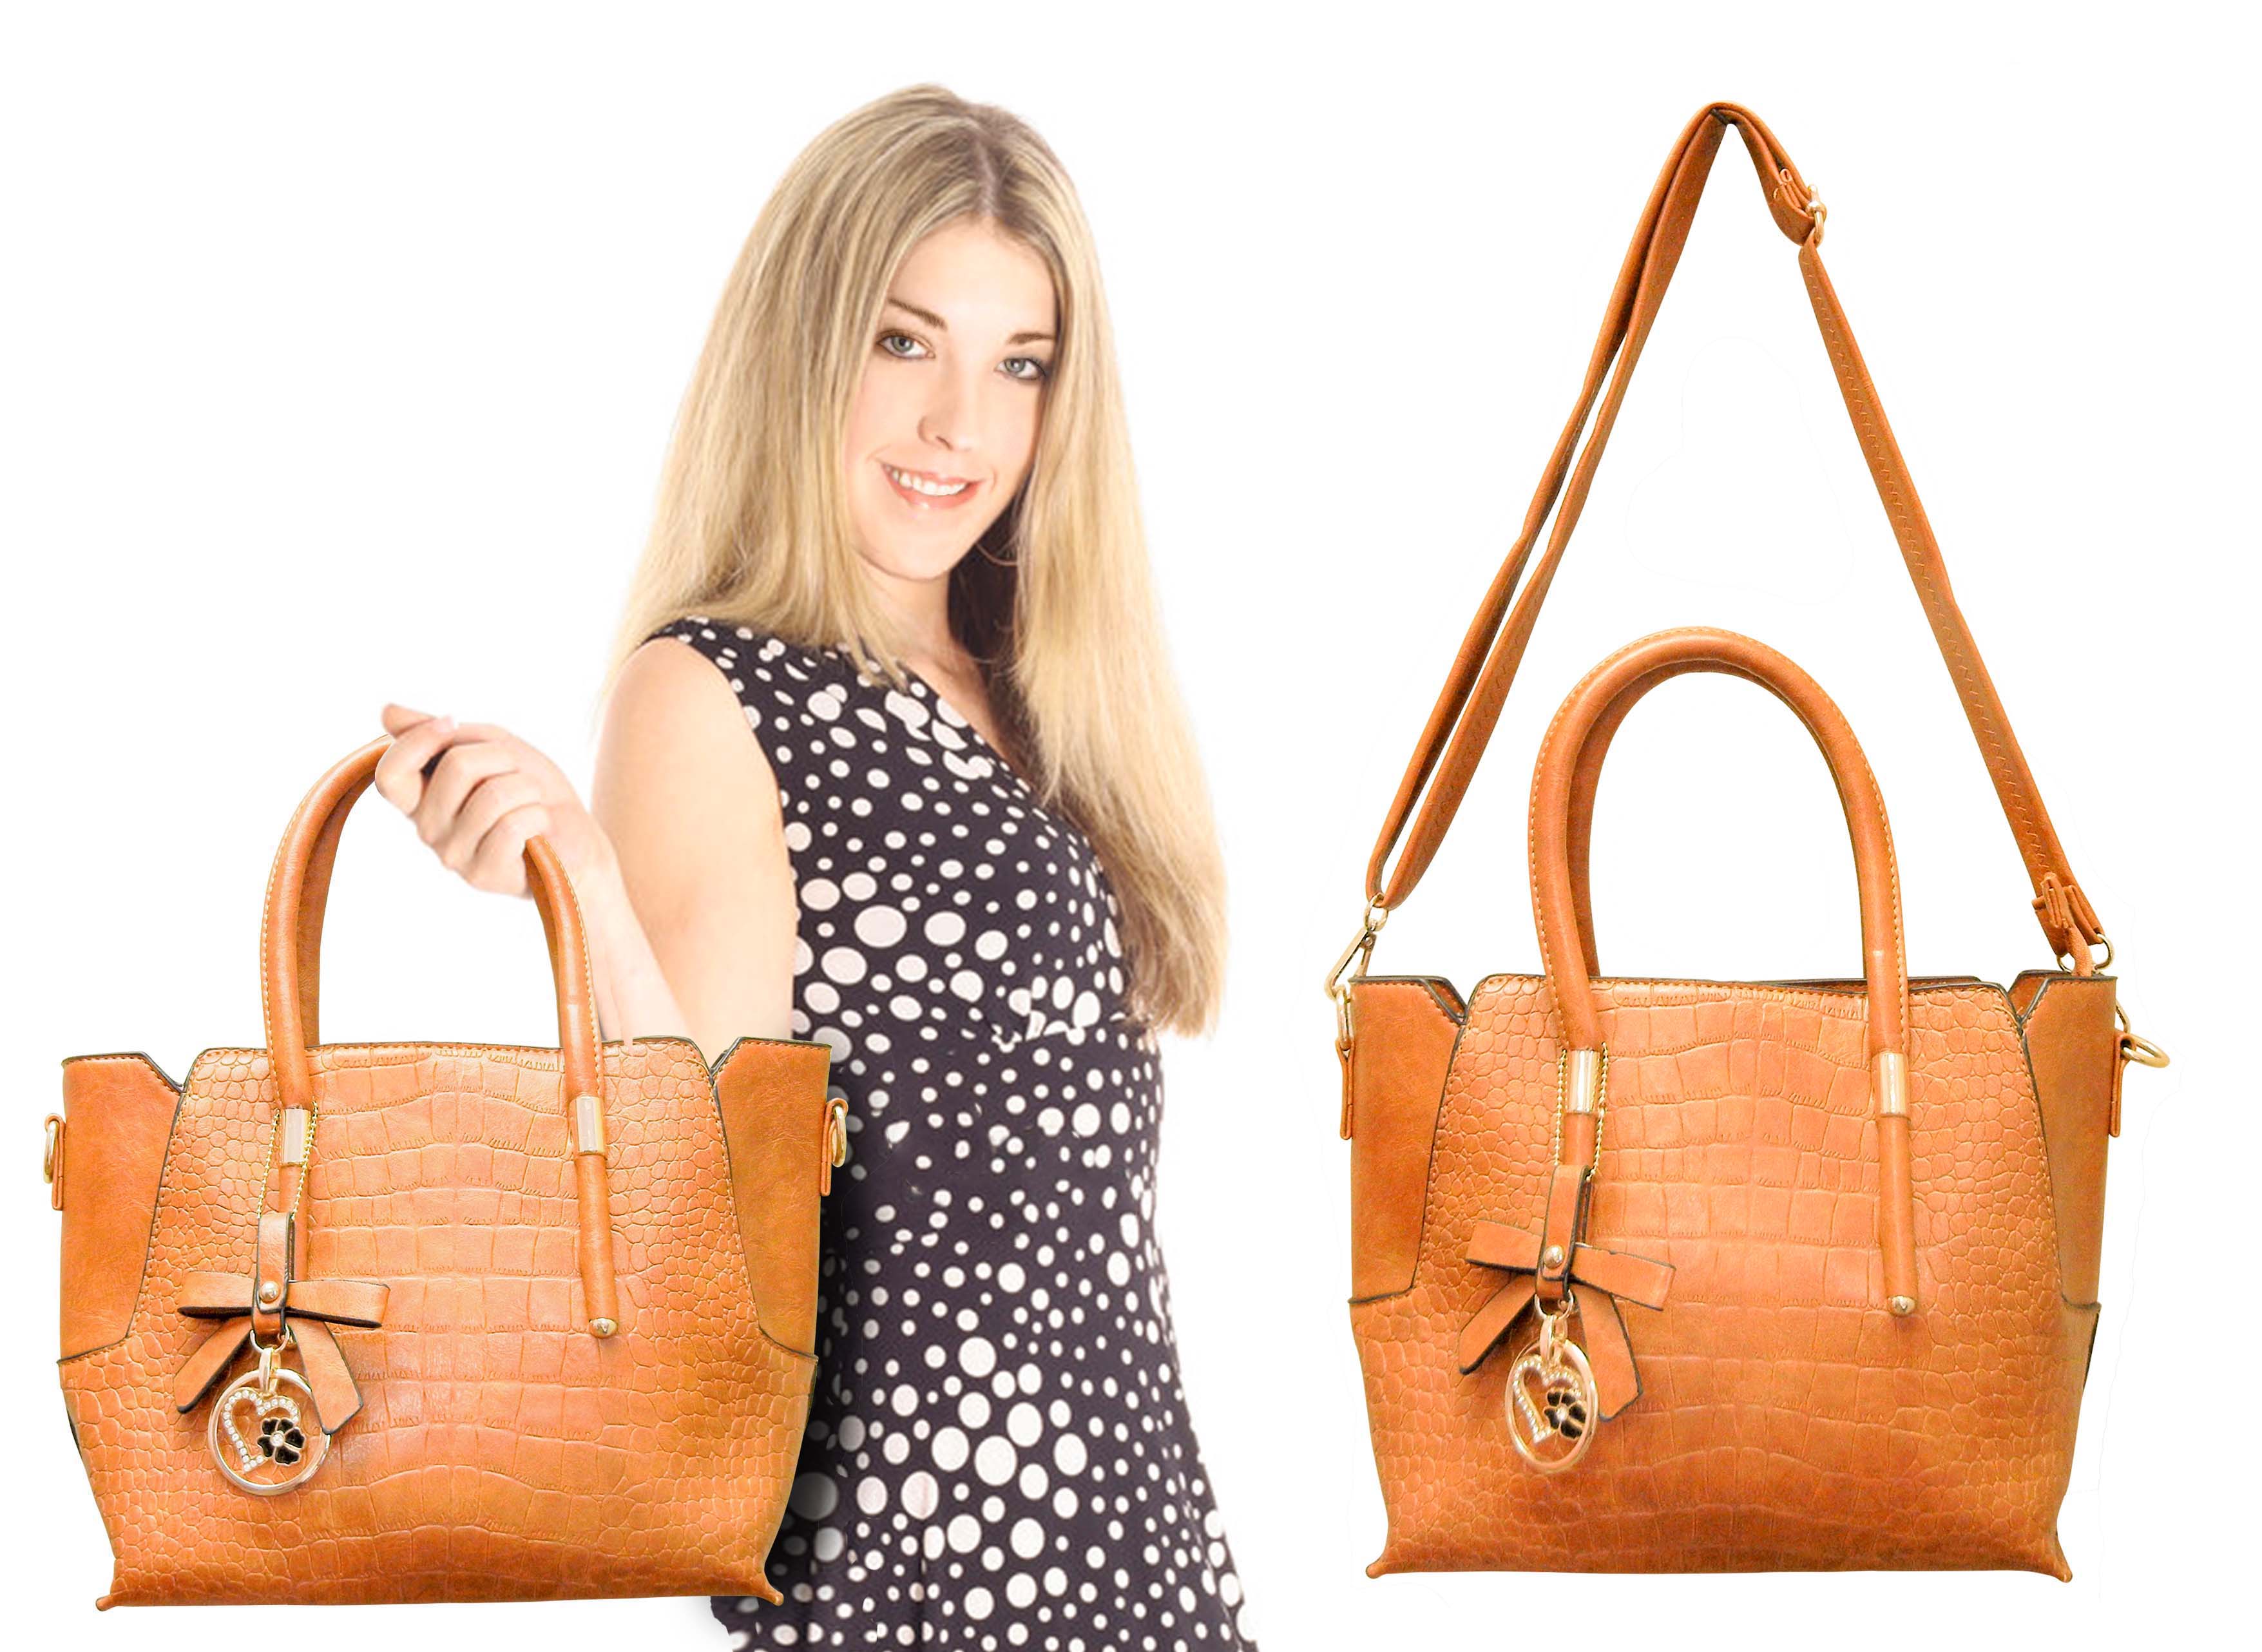 Midsize Ladies Handbag with removable straps, tan color,camel color,